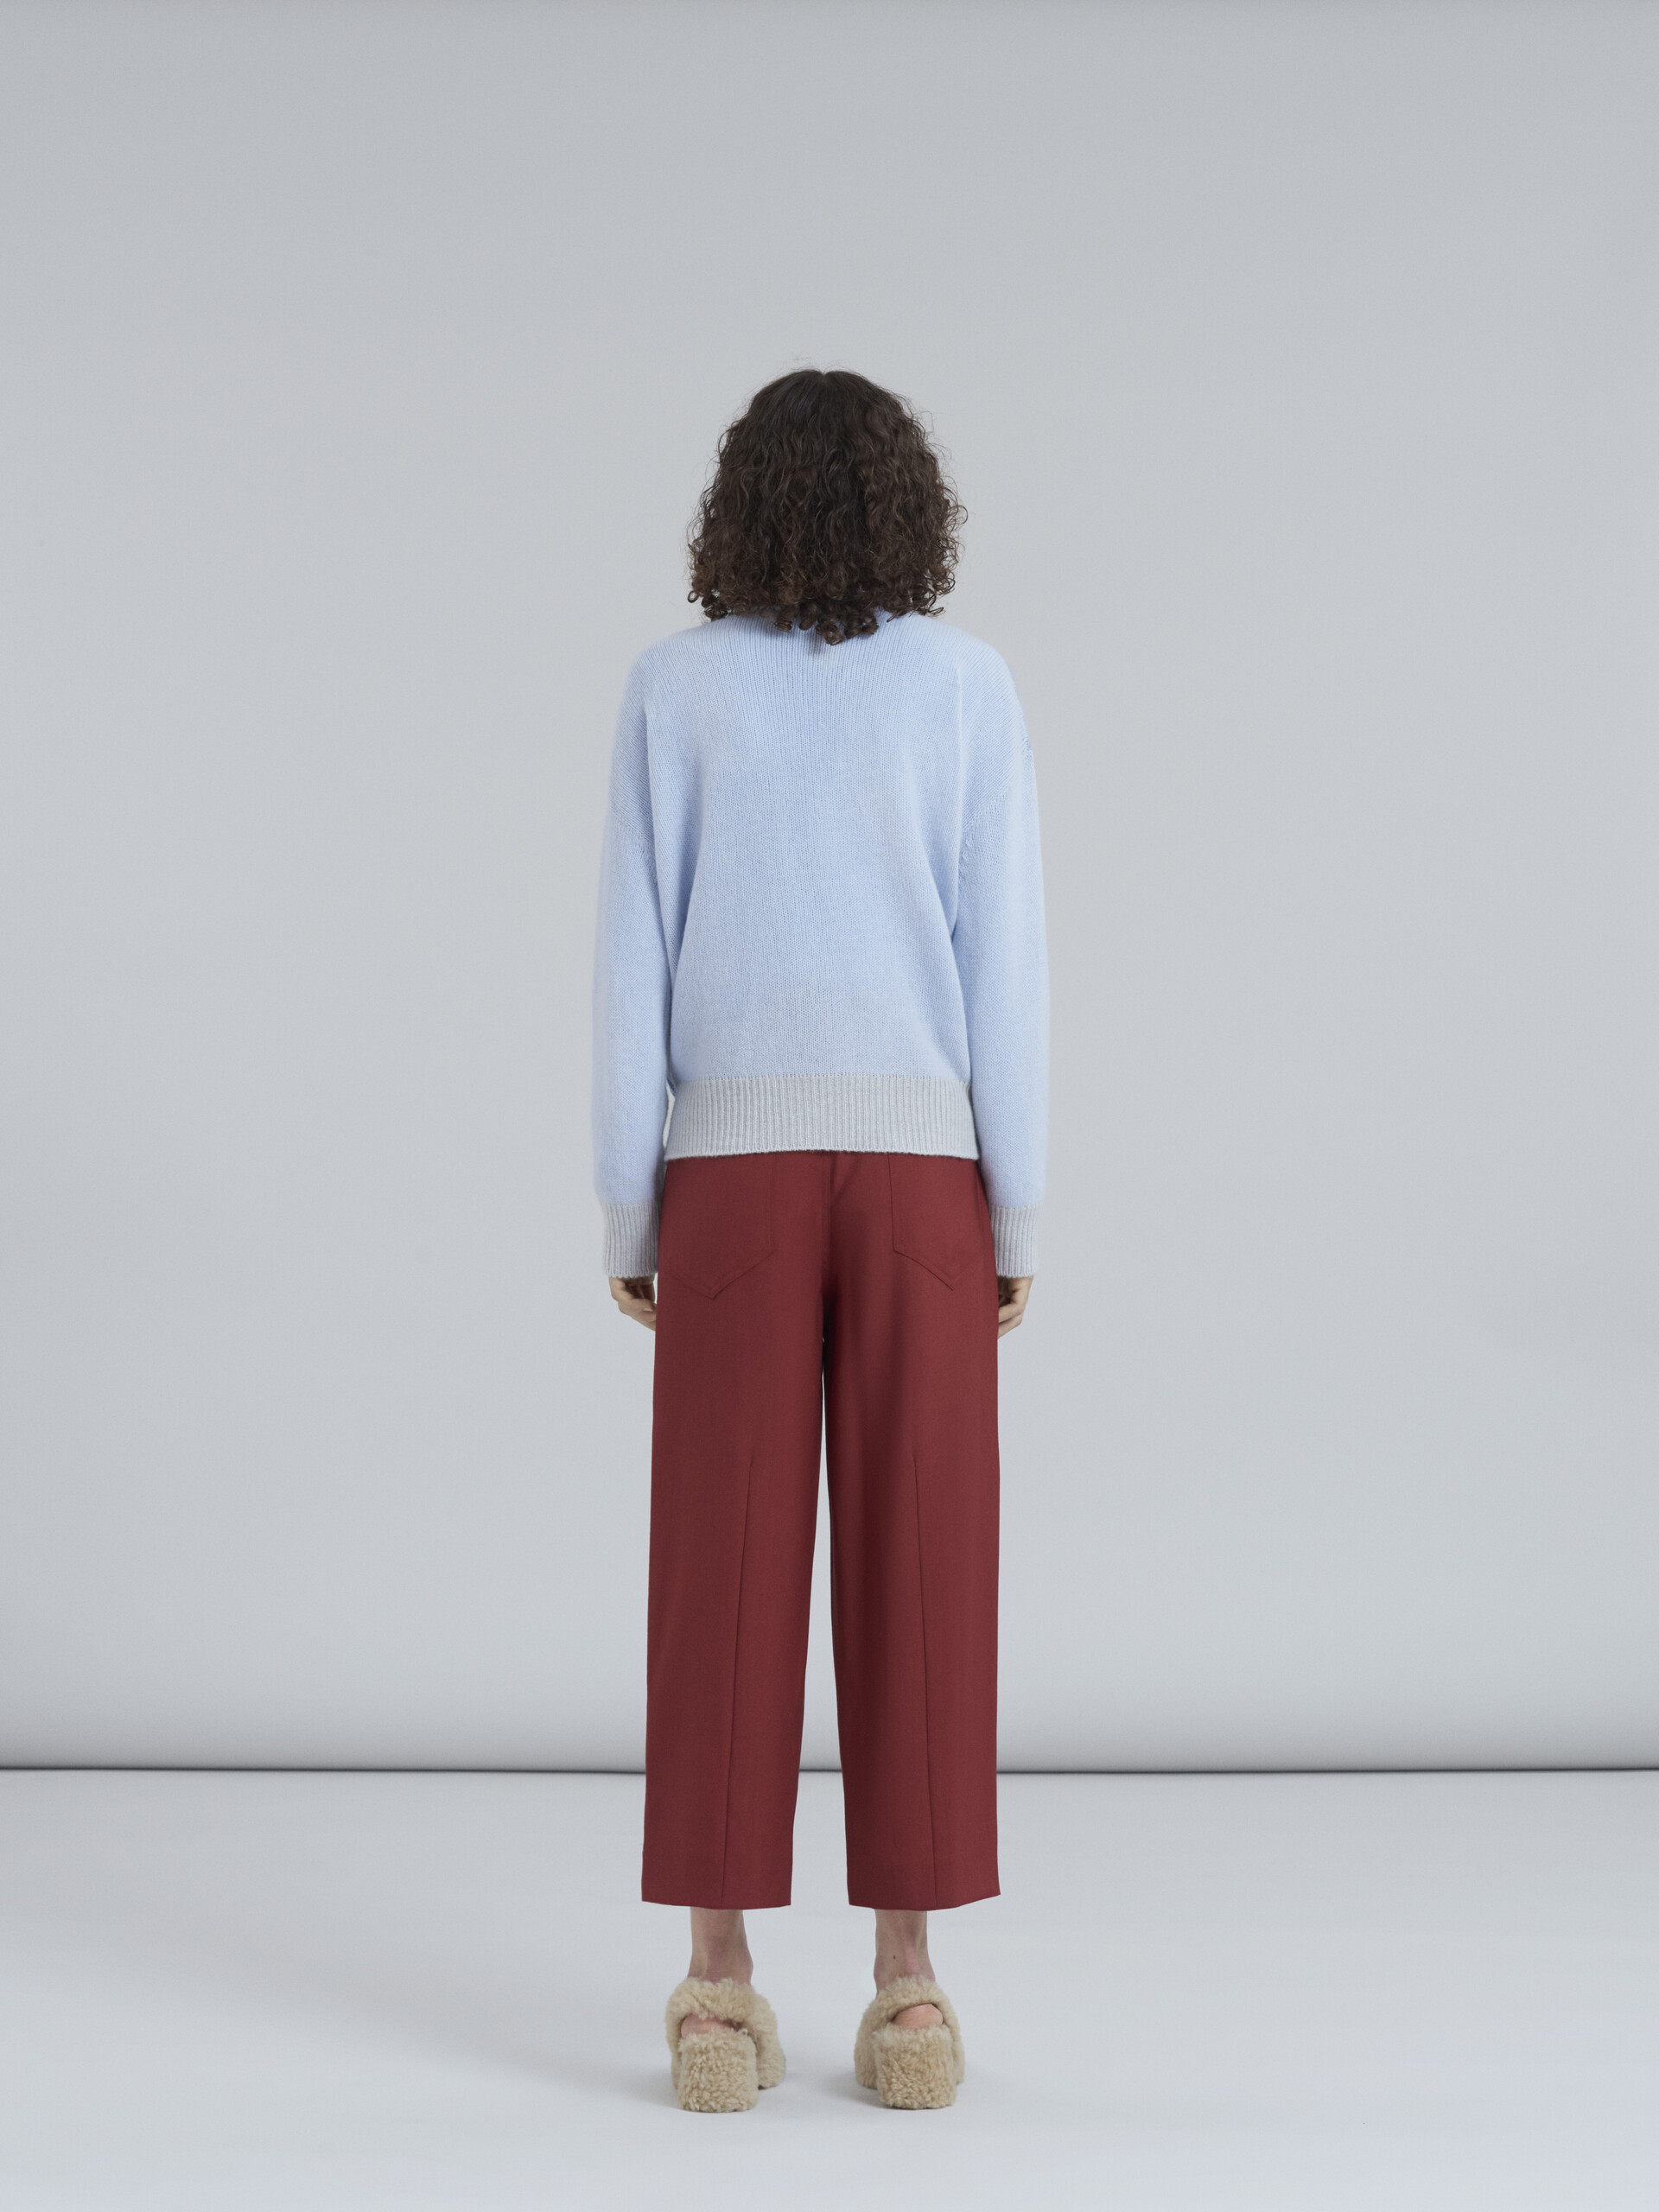 Pantaloni maschili corti in fresco di lana - Pantaloni - Image 3